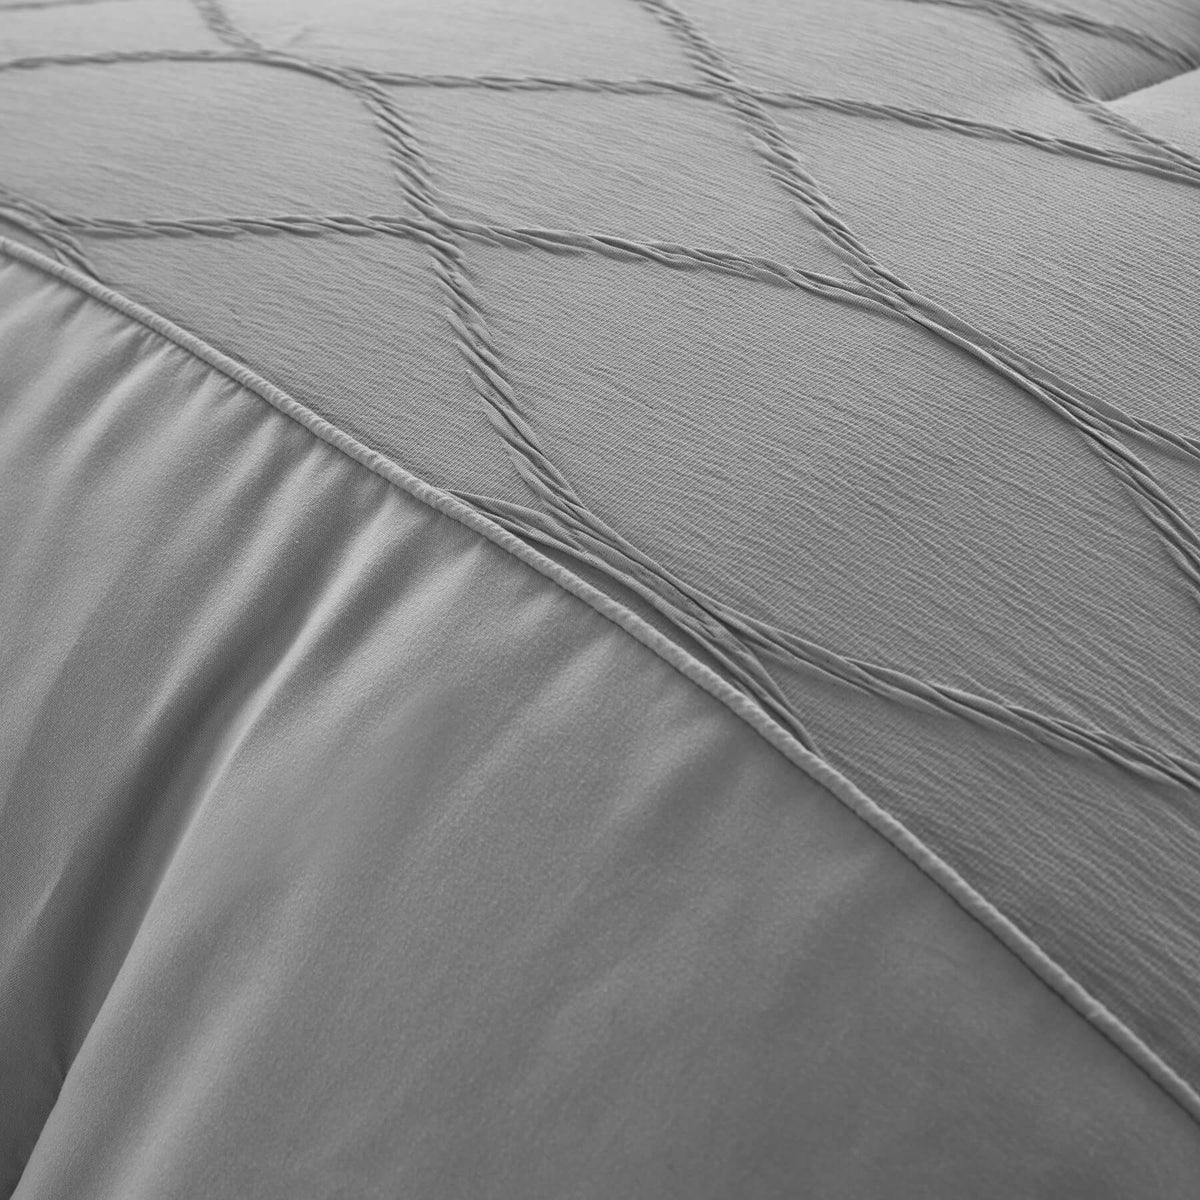 Chic Home Ophelia 5 Piece Textured Jacquard Comforter Set - Grey